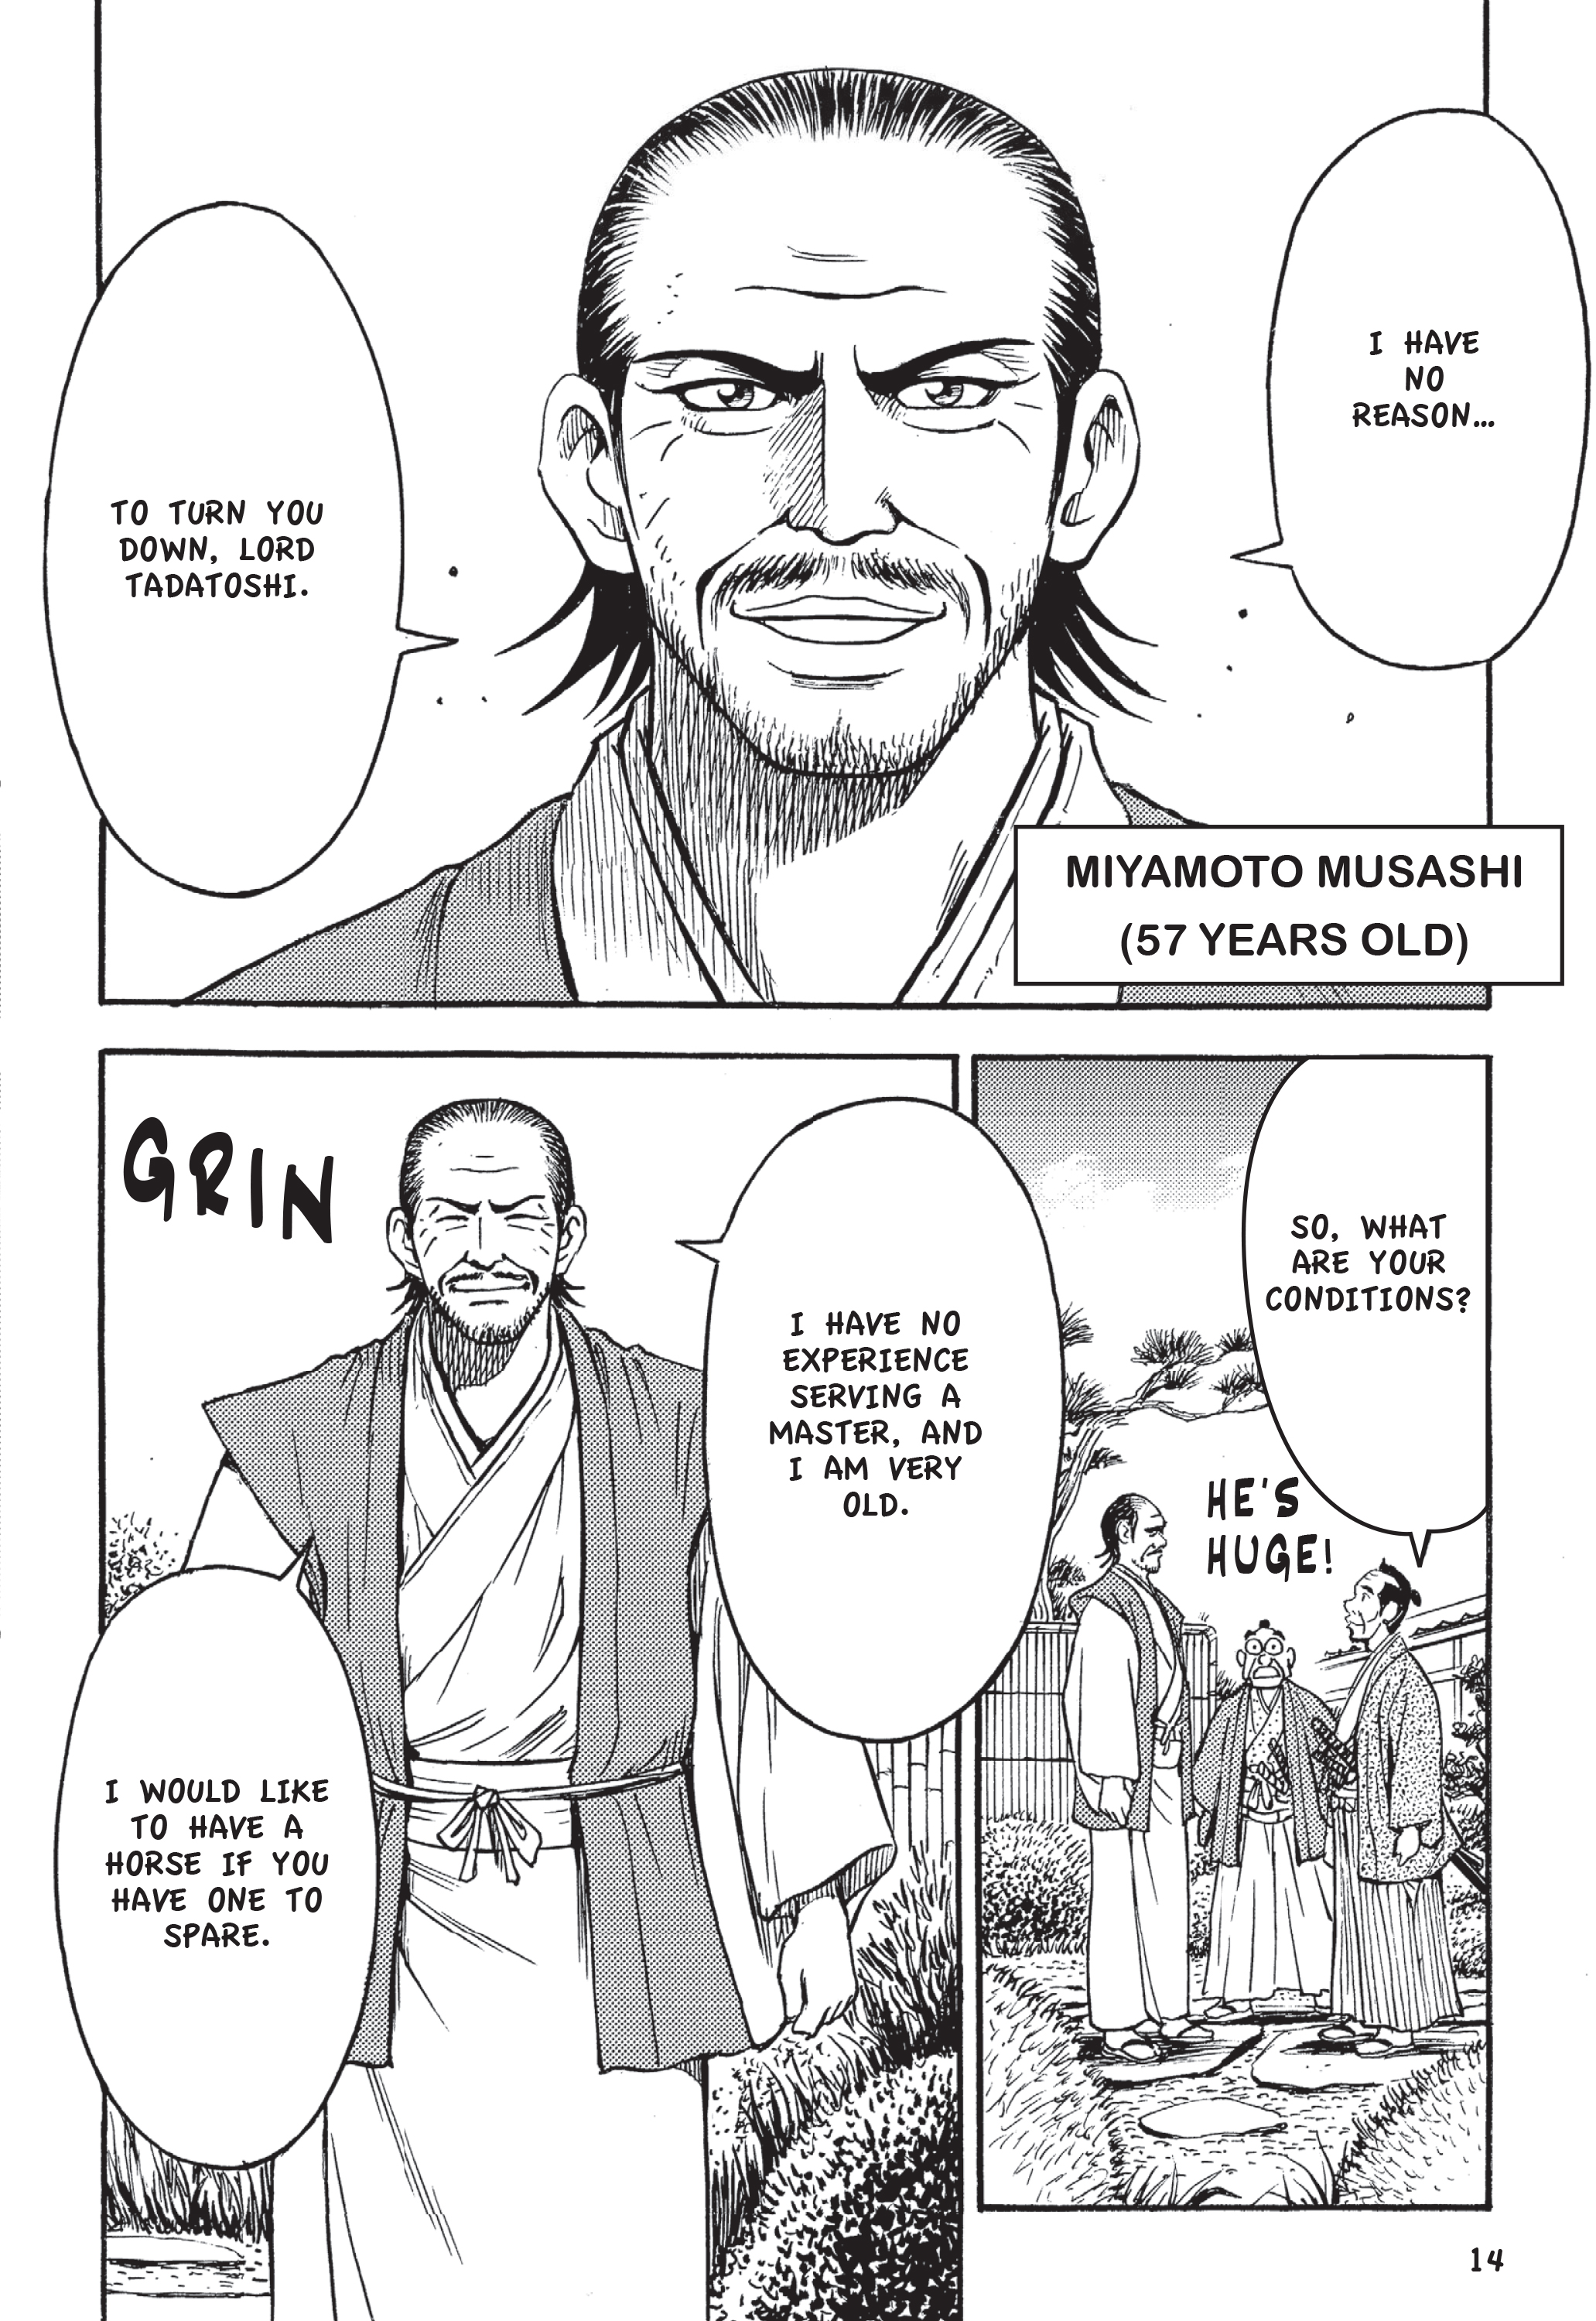 Miyamoto Musashi's Book of Five Rings: The Manga Edition